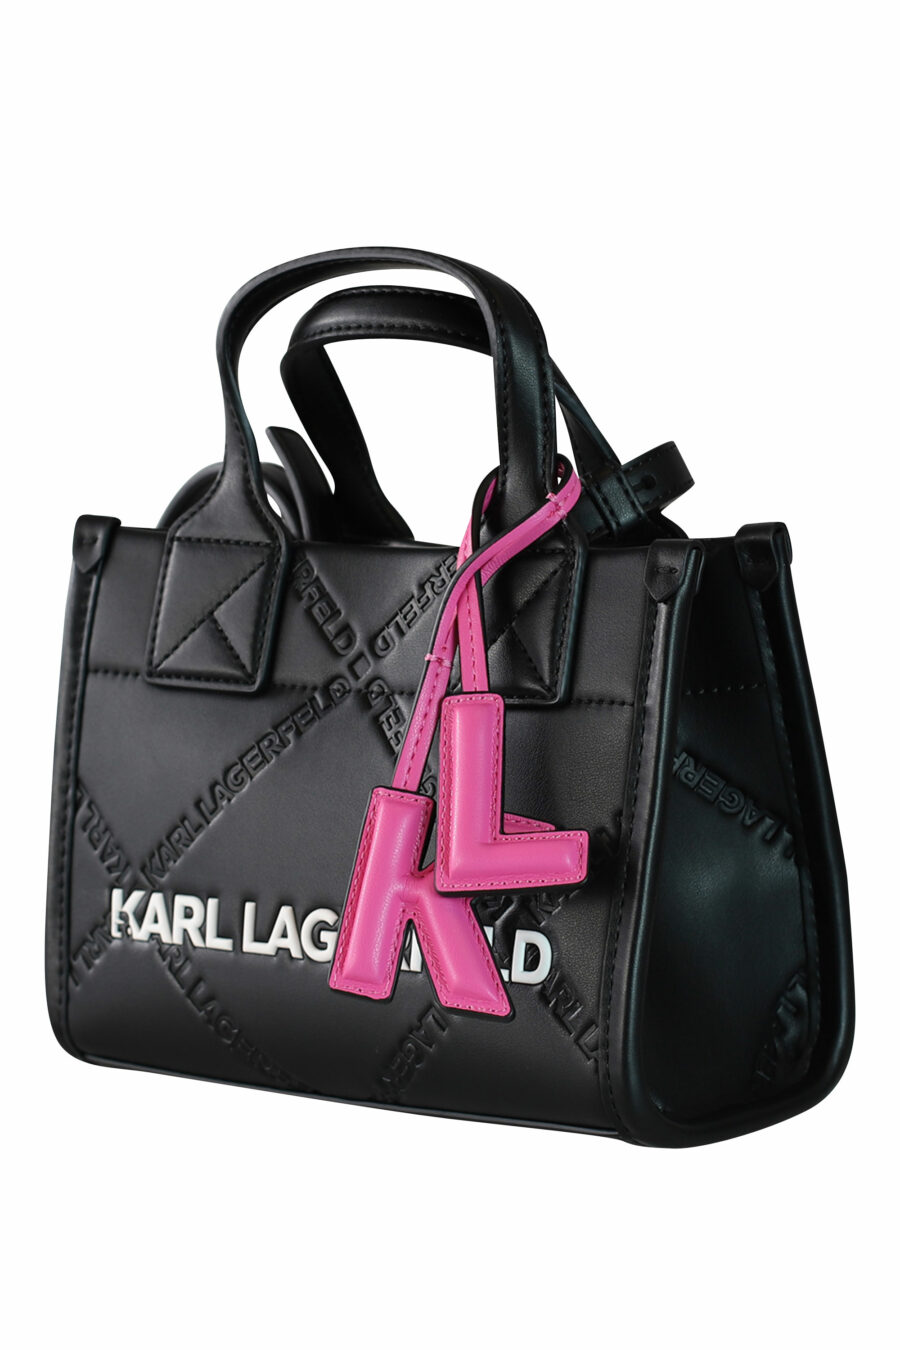 Tote bag mini negro /k/skuare/ con logo en relieve - 8720744102557 2